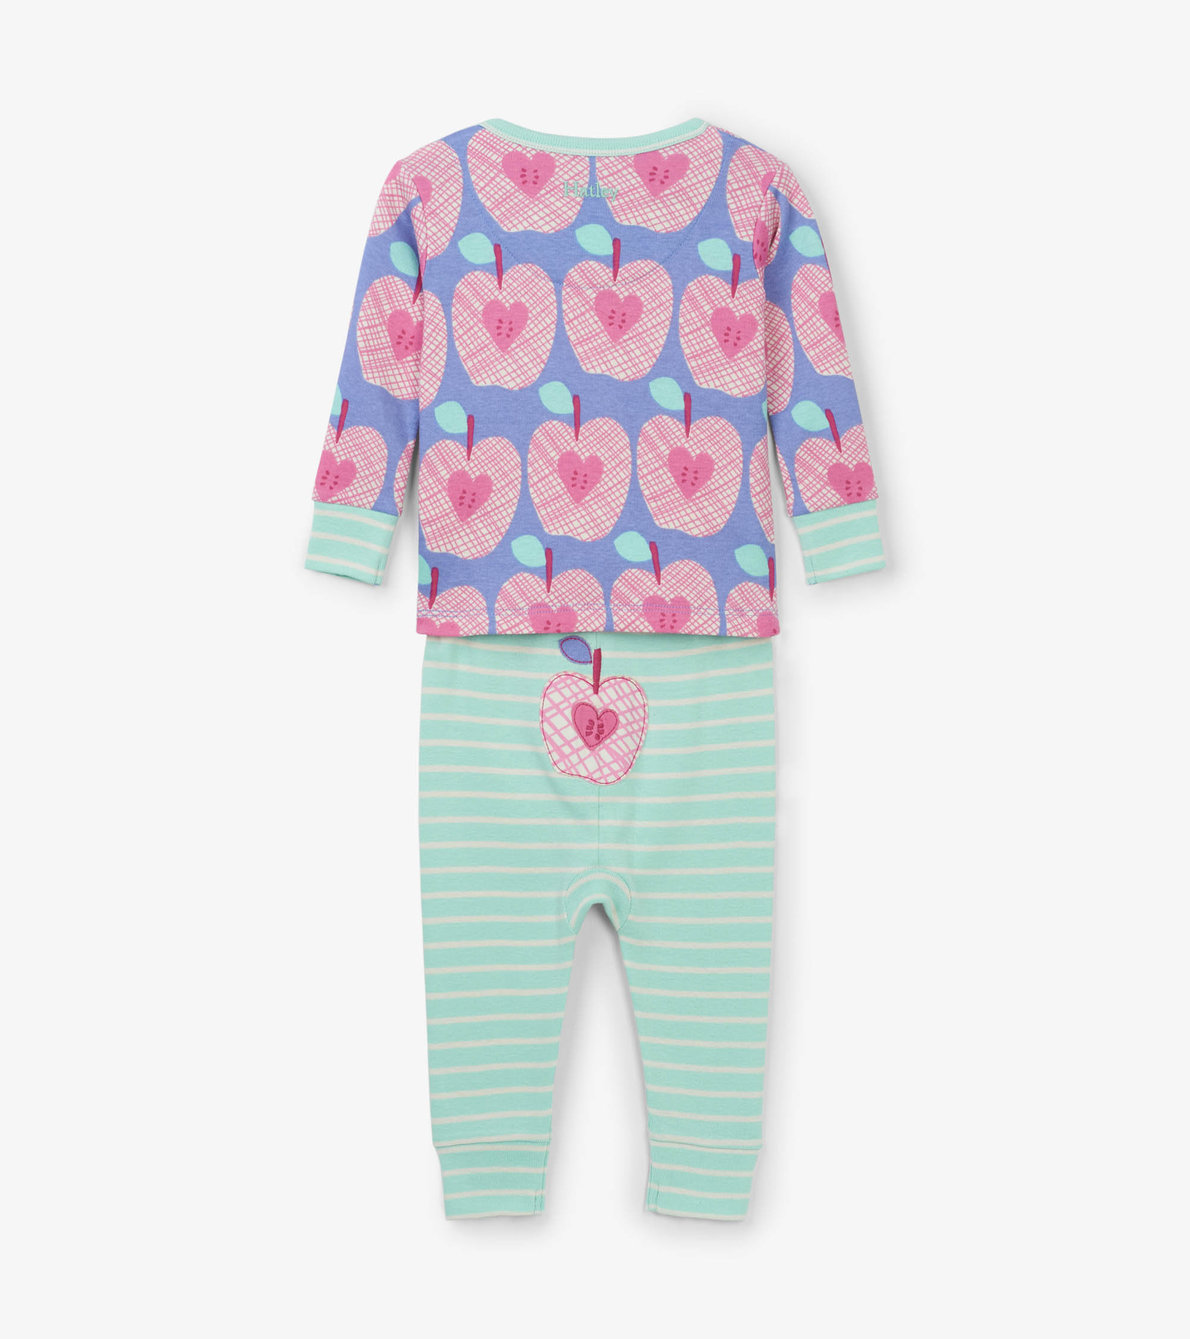 View larger image of Apple Orchard Organic Cotton Baby Pajama Set